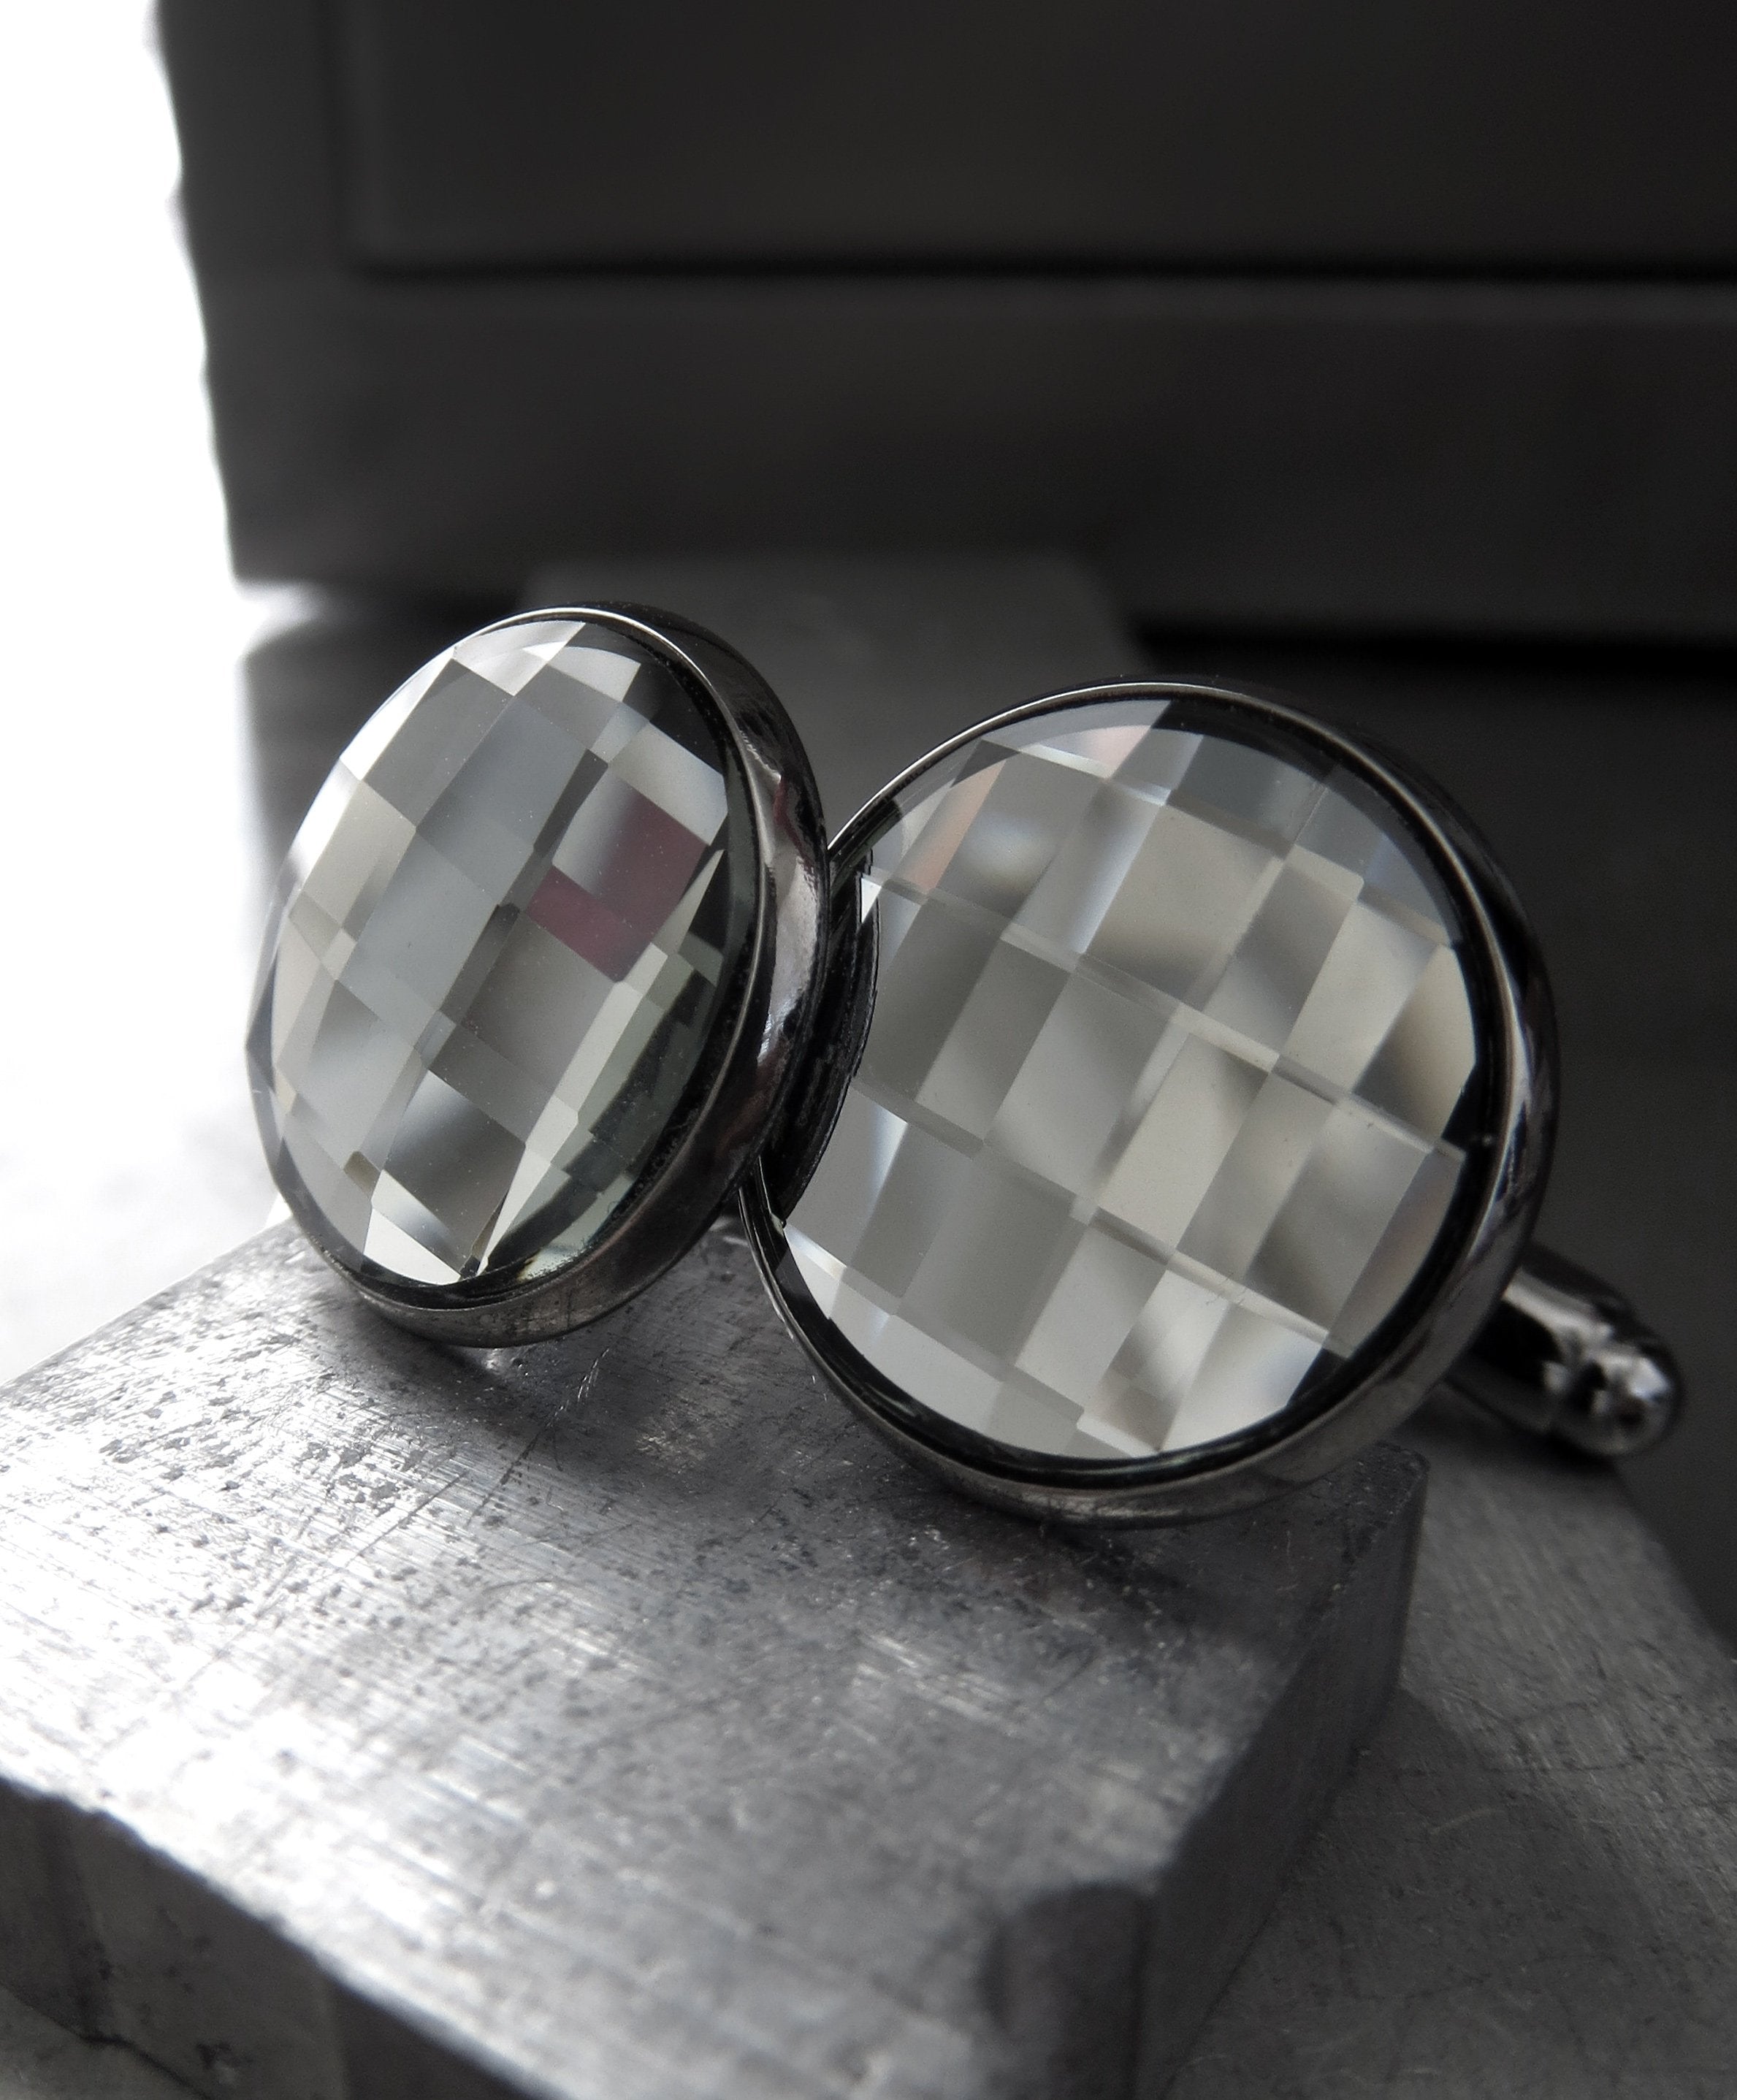 Grey Mirror Cuff Links with Black Diamond Swarovski Crystal - Wedding Cufflinks, Gift for Groom, Groomsmen, Husband, Boyfriend, Fathers Day